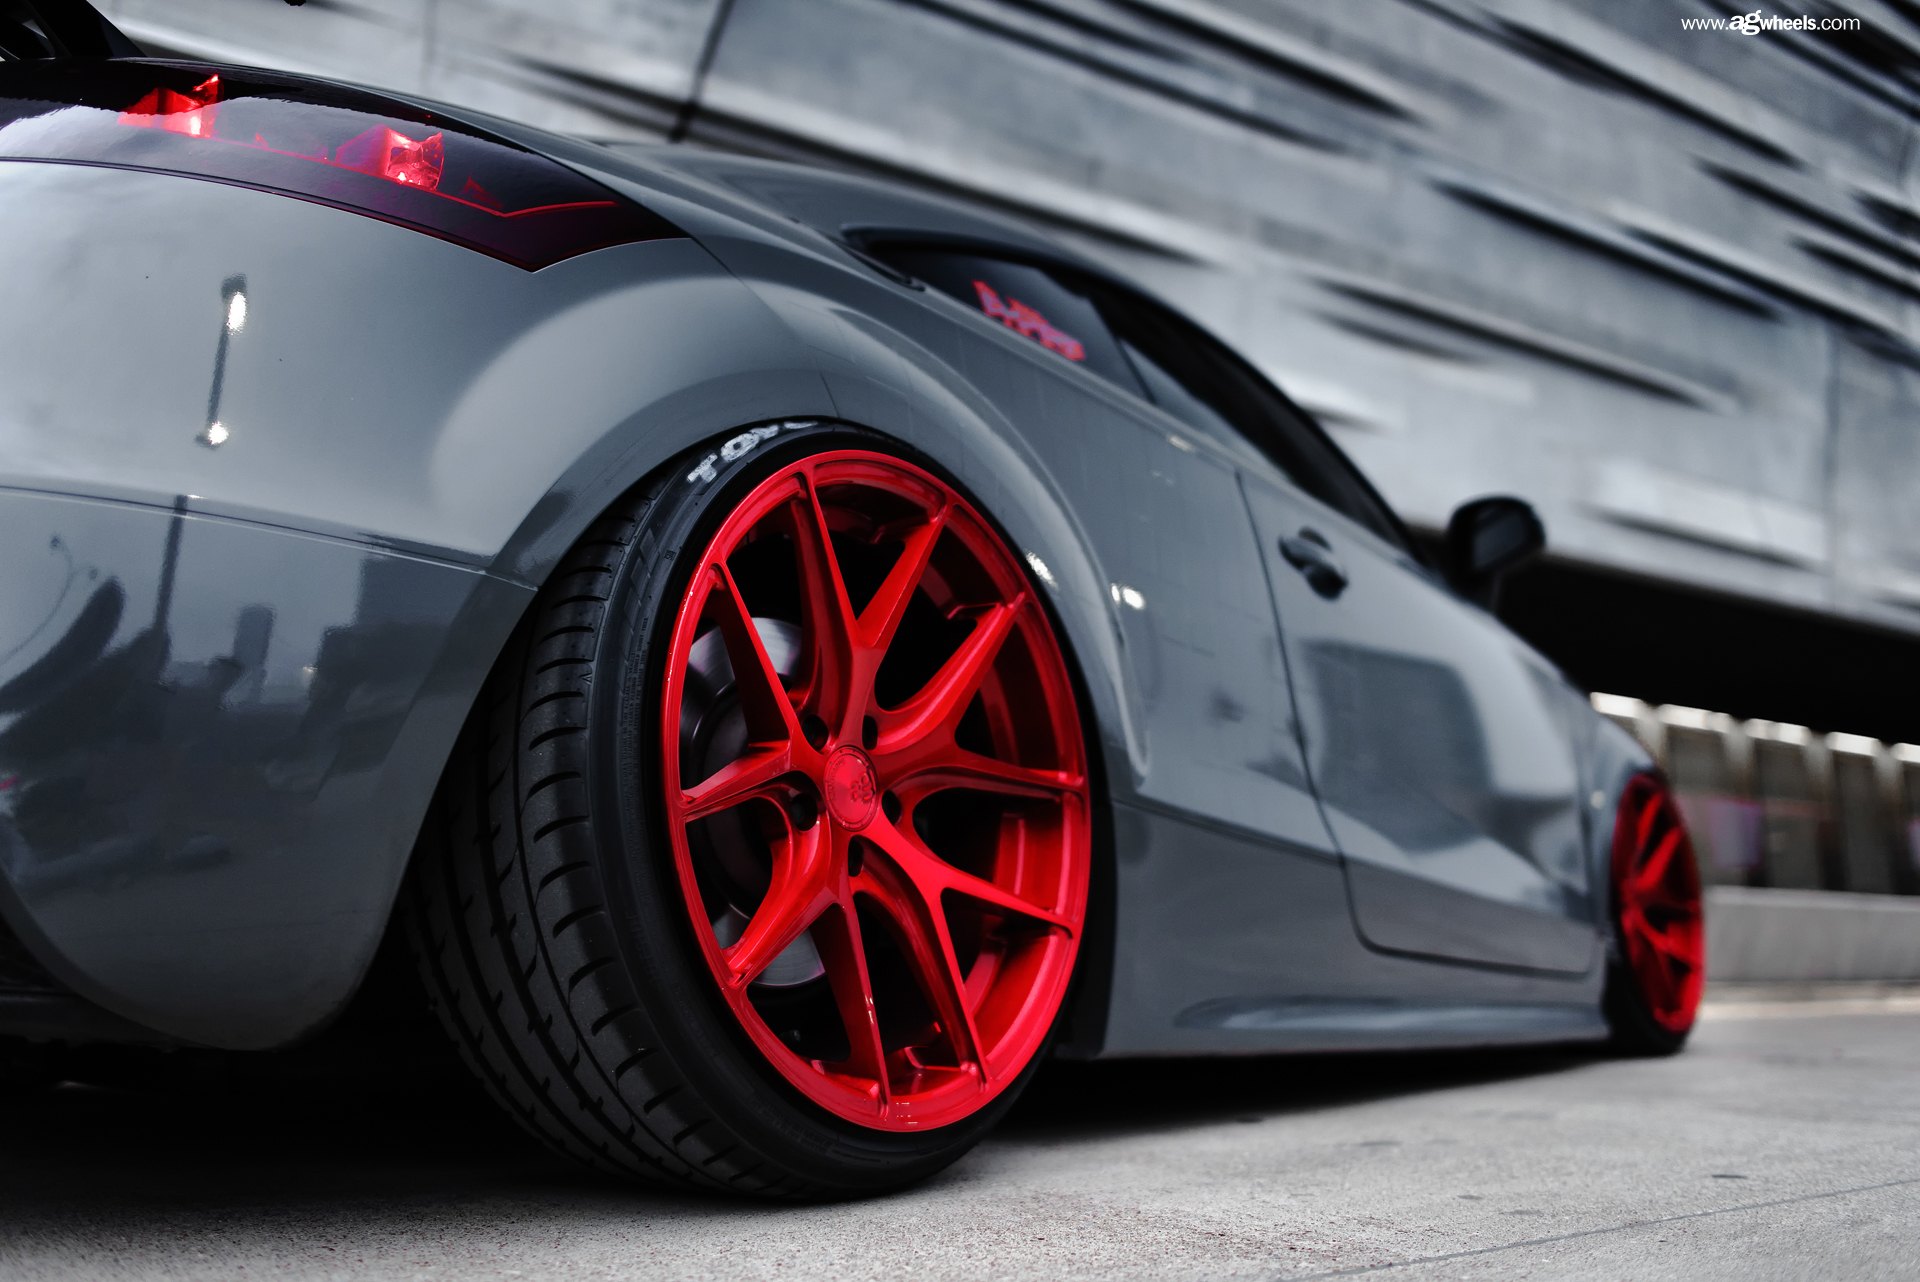 Audi TT Red Wheels